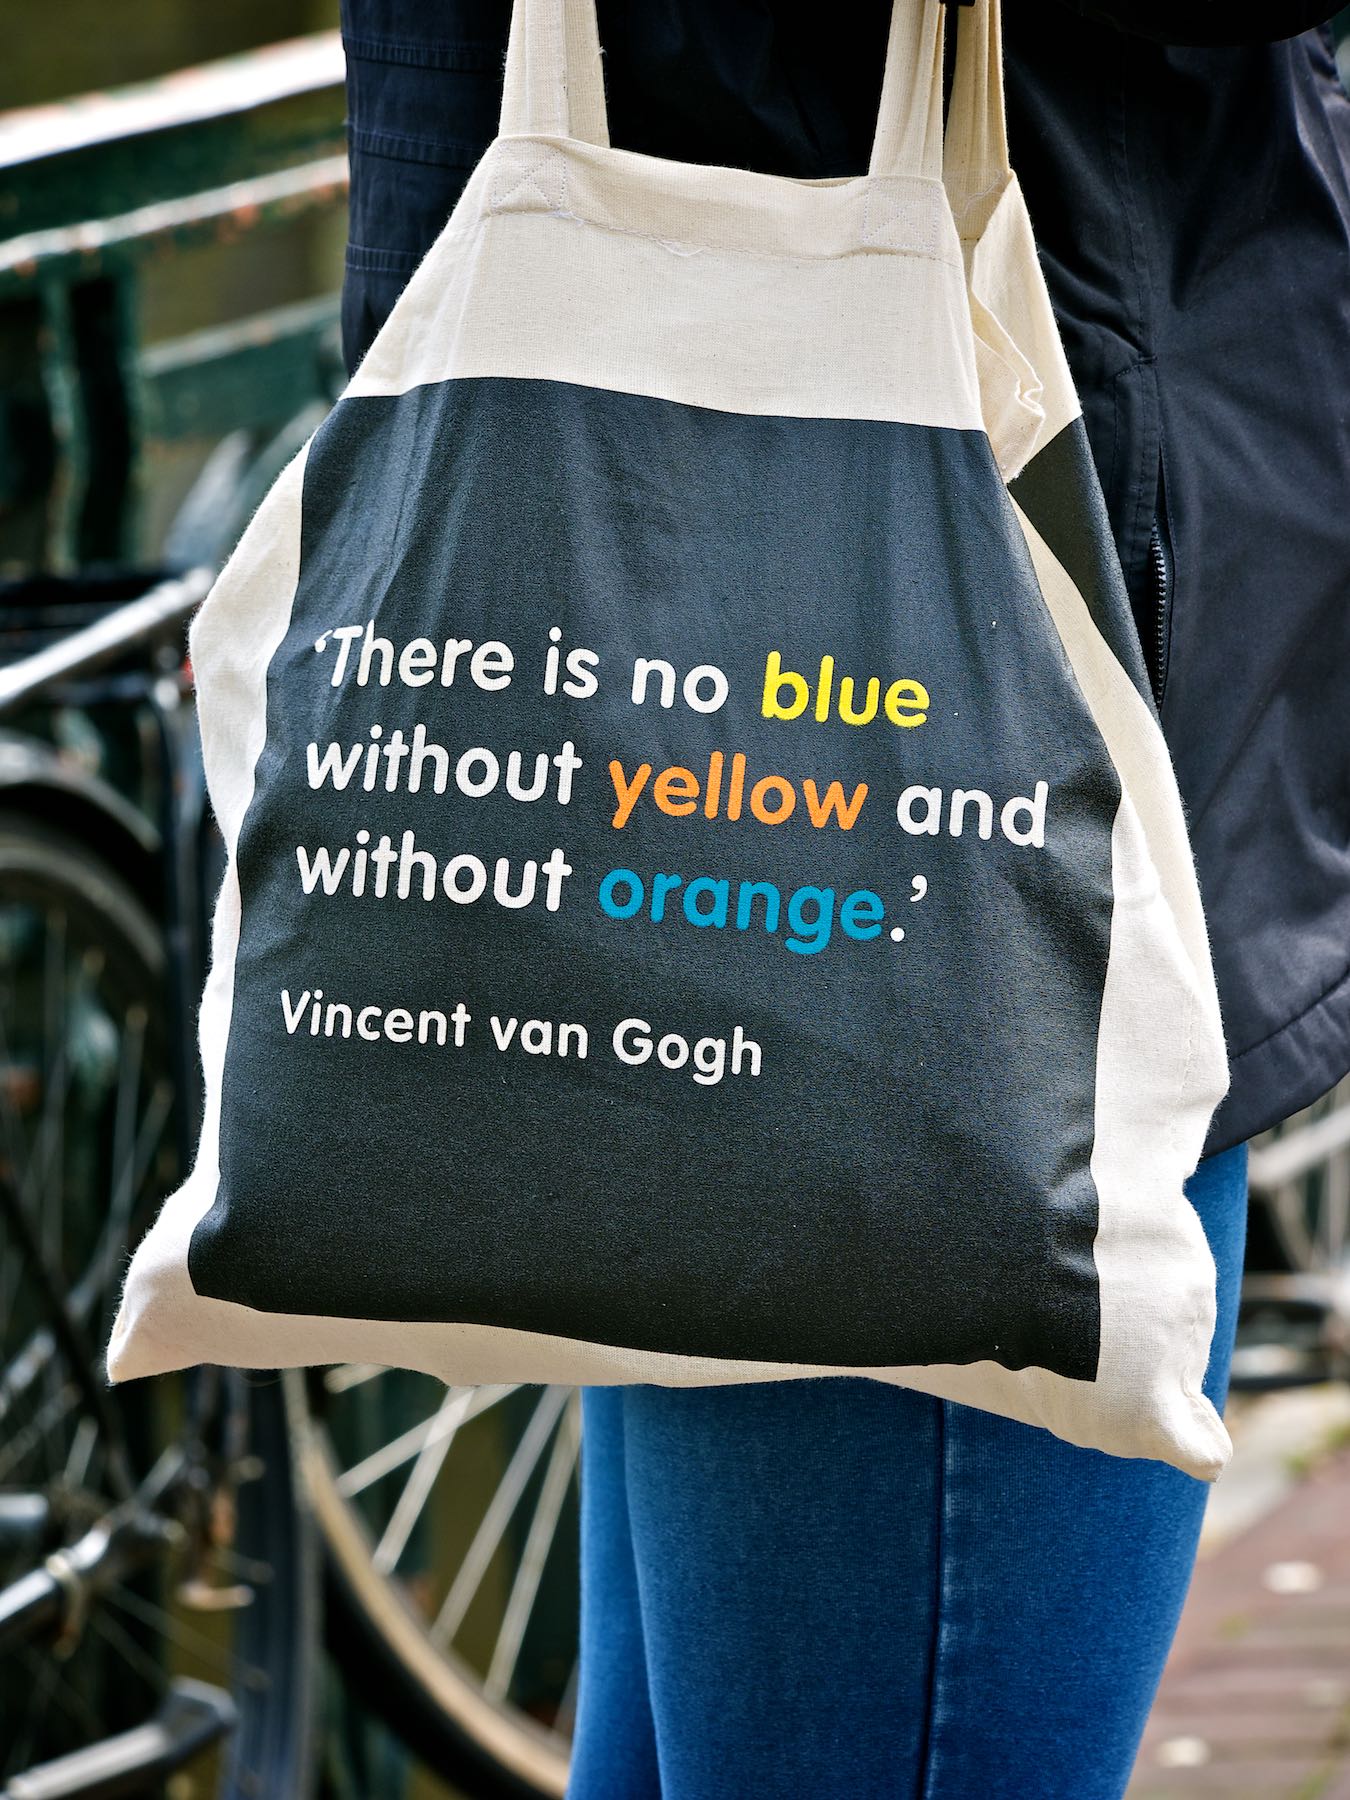 Van Gogh's words